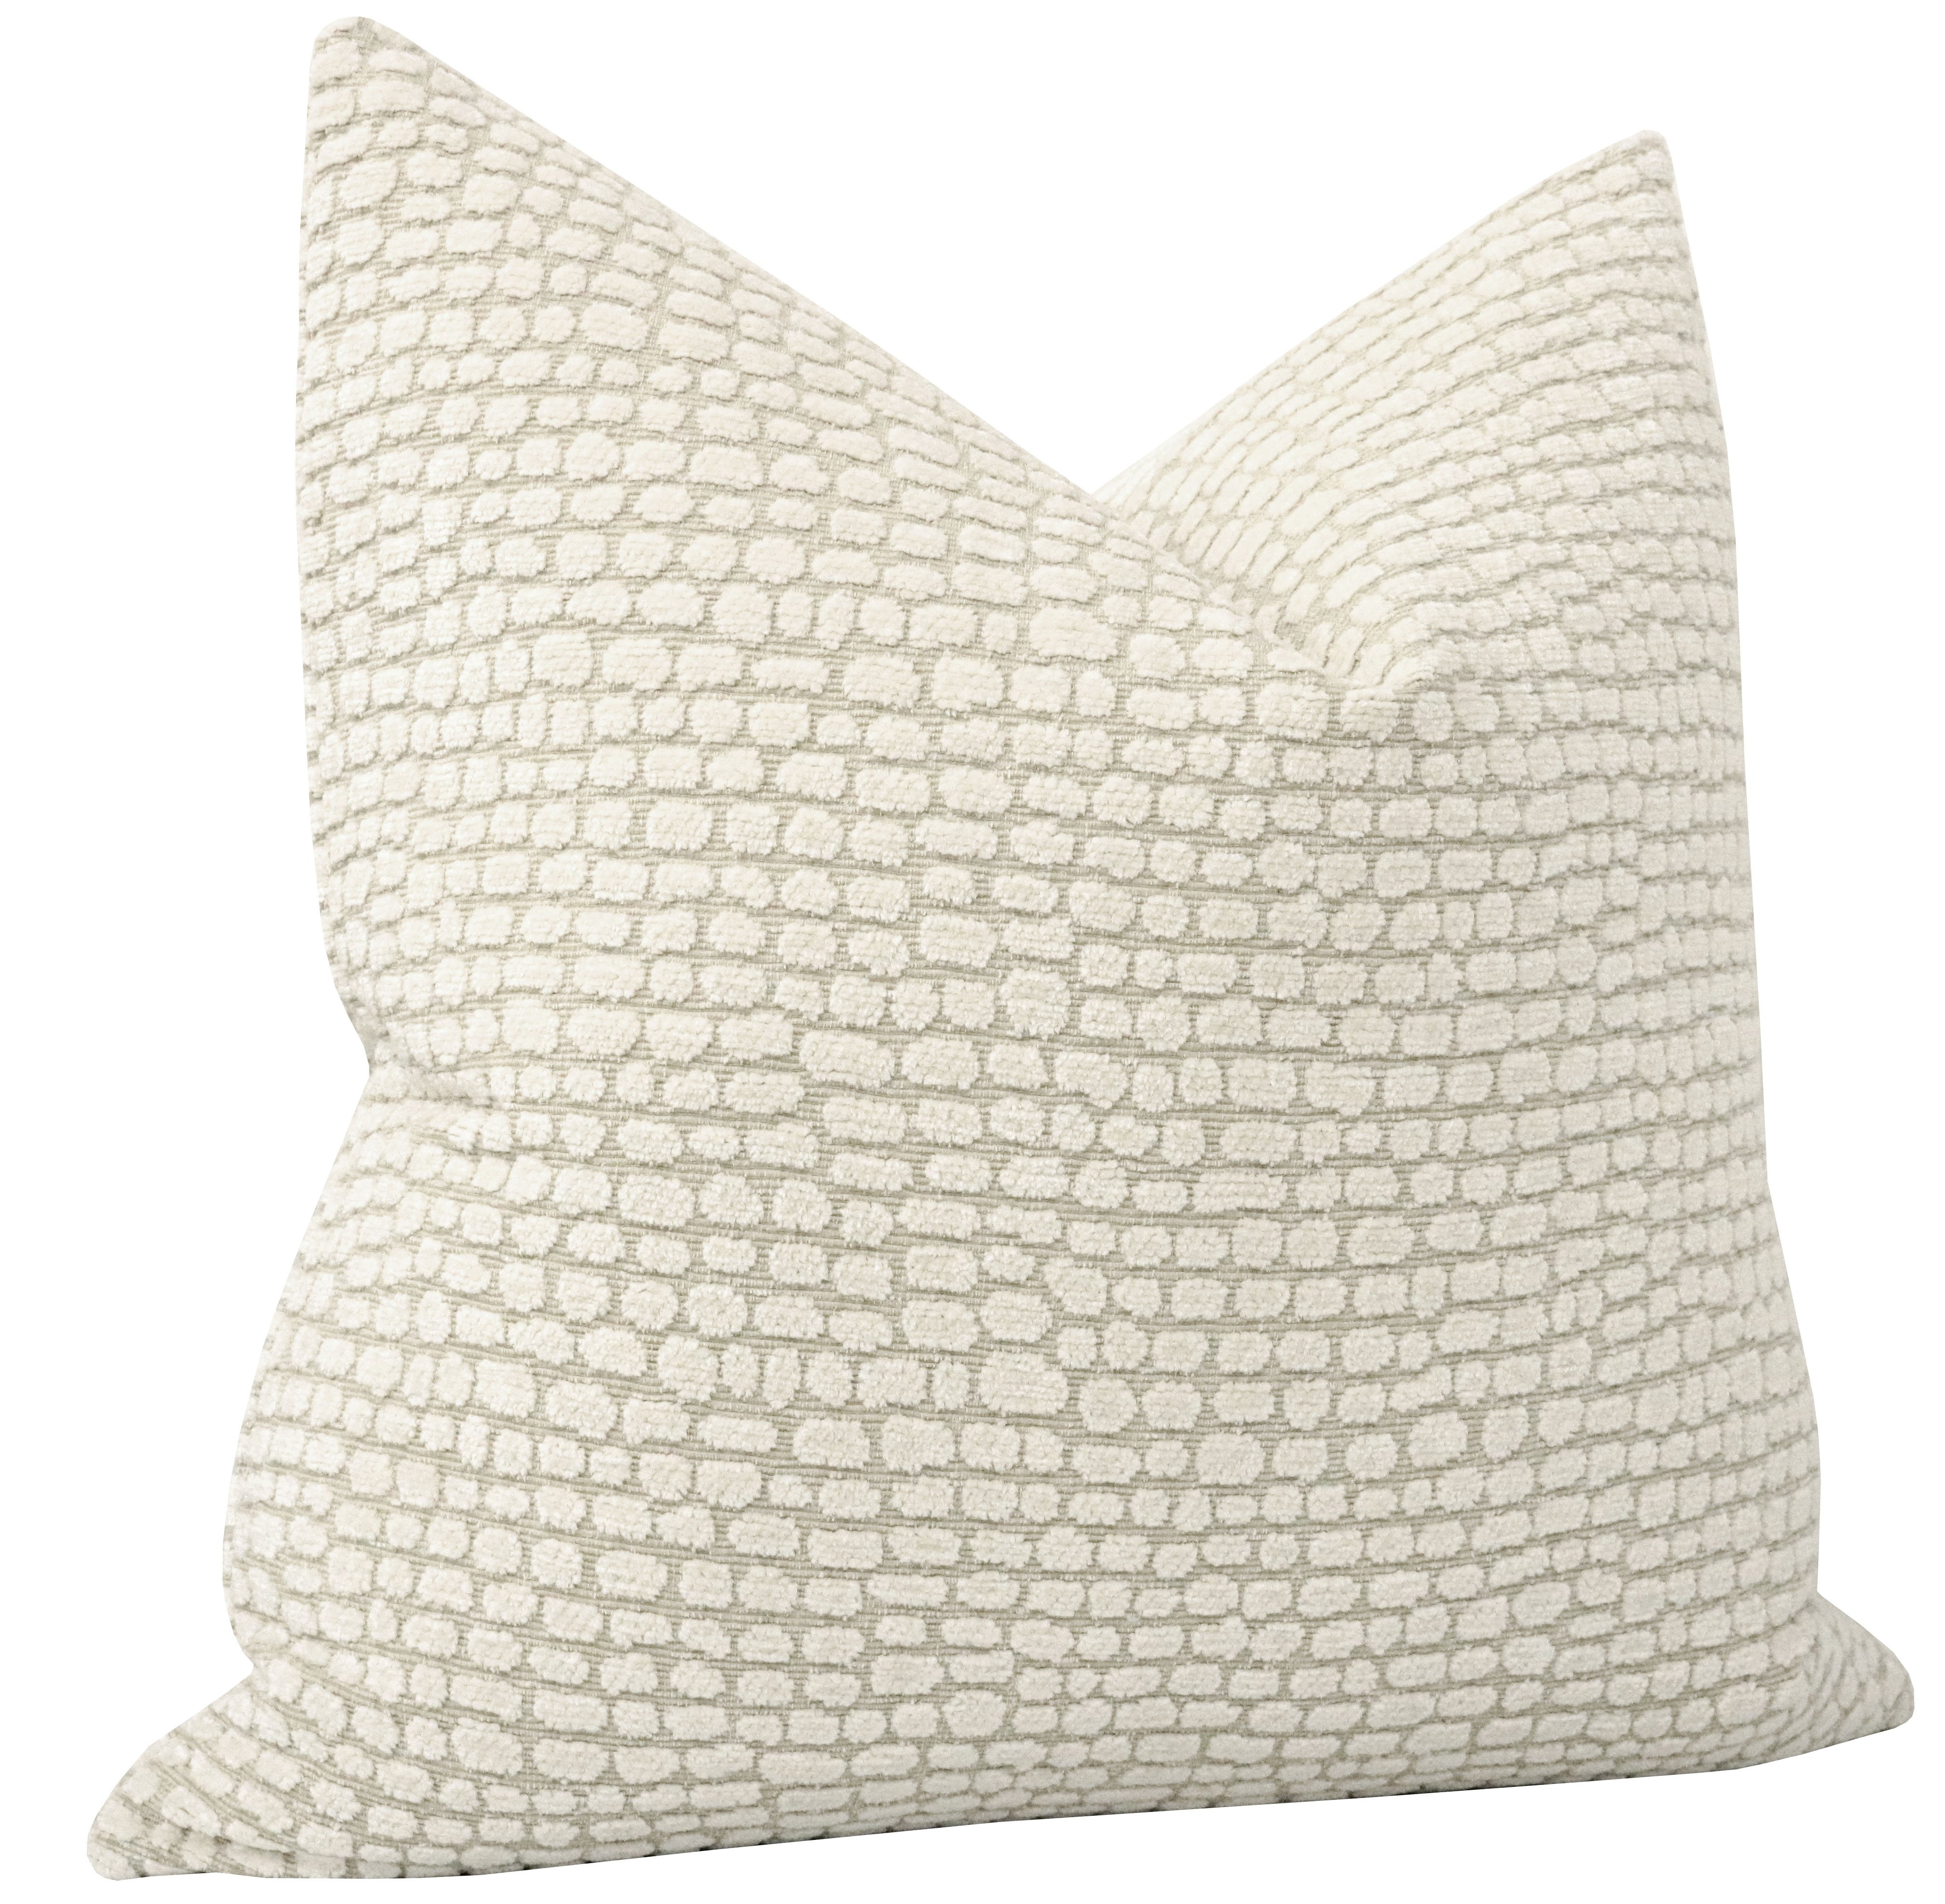 Ocelot Chenille Throw Pillow, 18" x 18" - Image 3